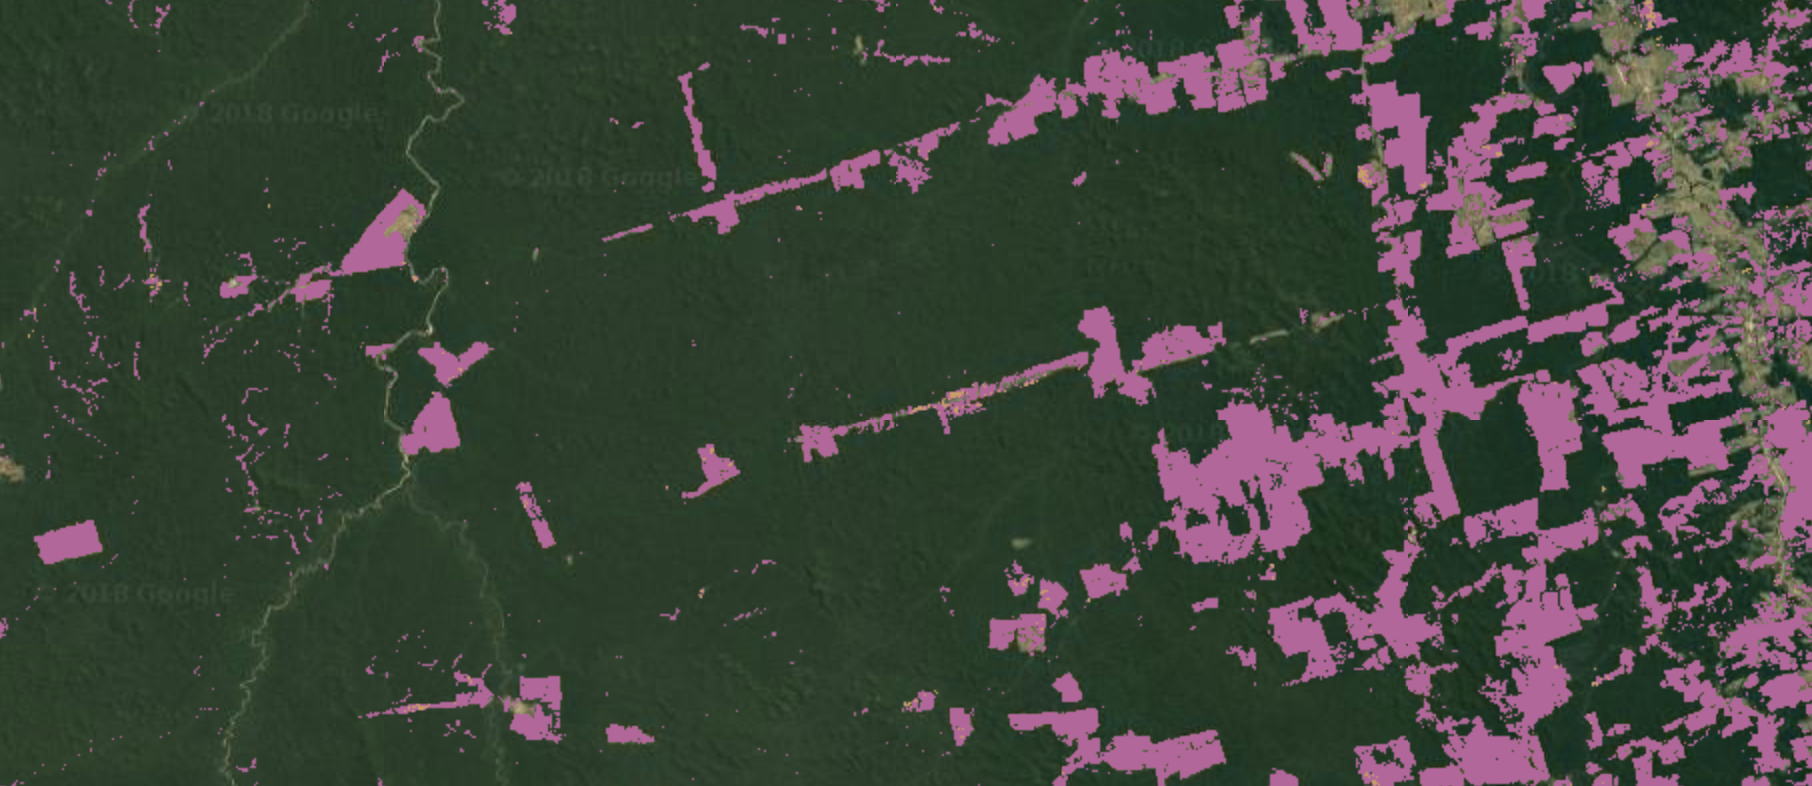 Amazon forest deforestation map